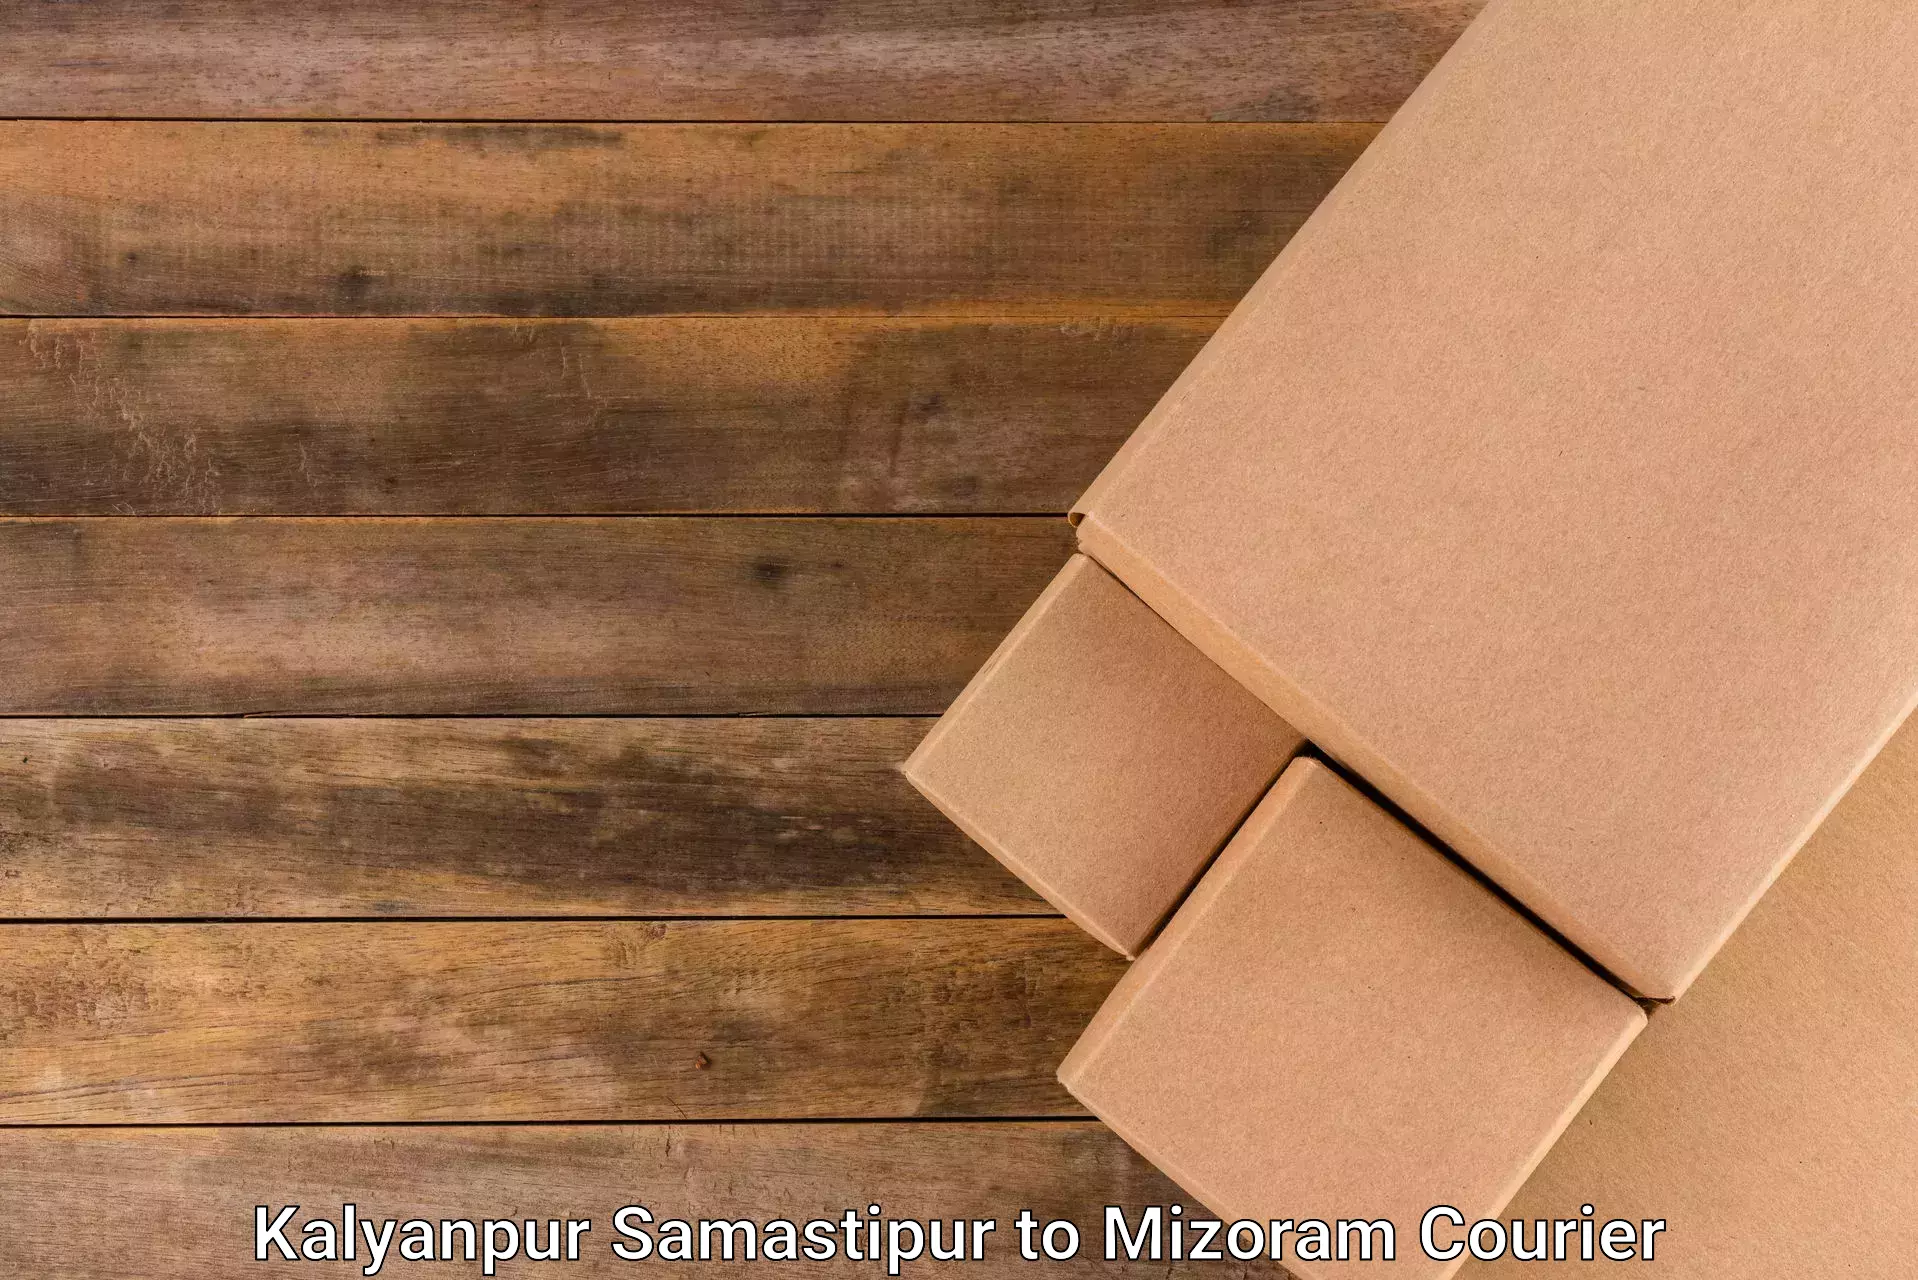 On-call courier service Kalyanpur Samastipur to Mizoram